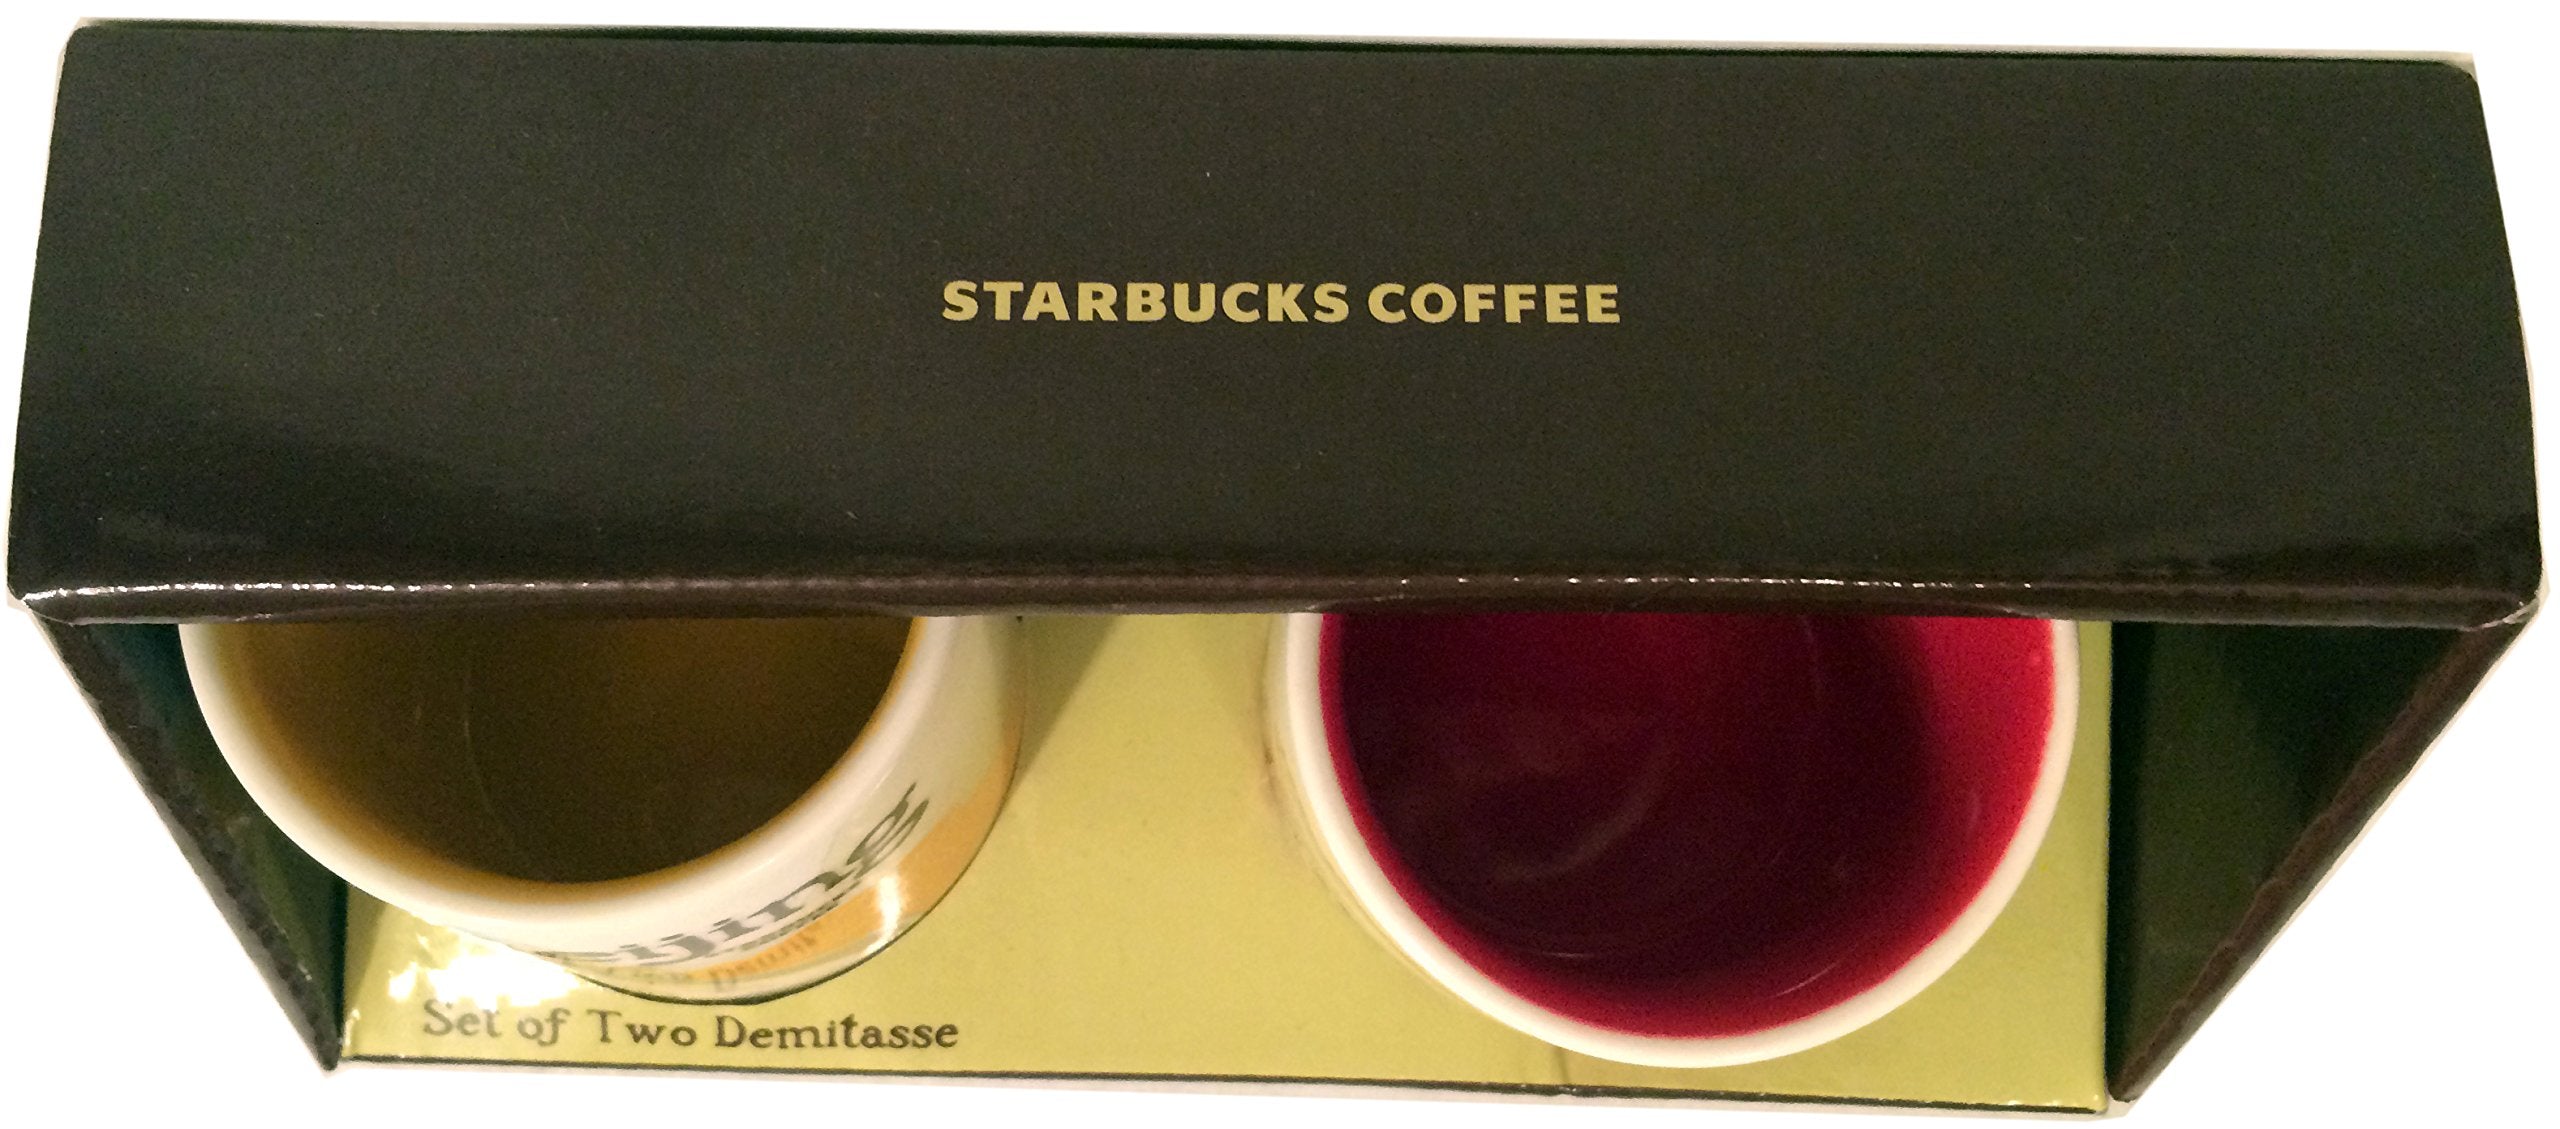 Starbucks Global Icon Series Beijing and China Demitasse Mugs, 3 Oz (Set of 2)